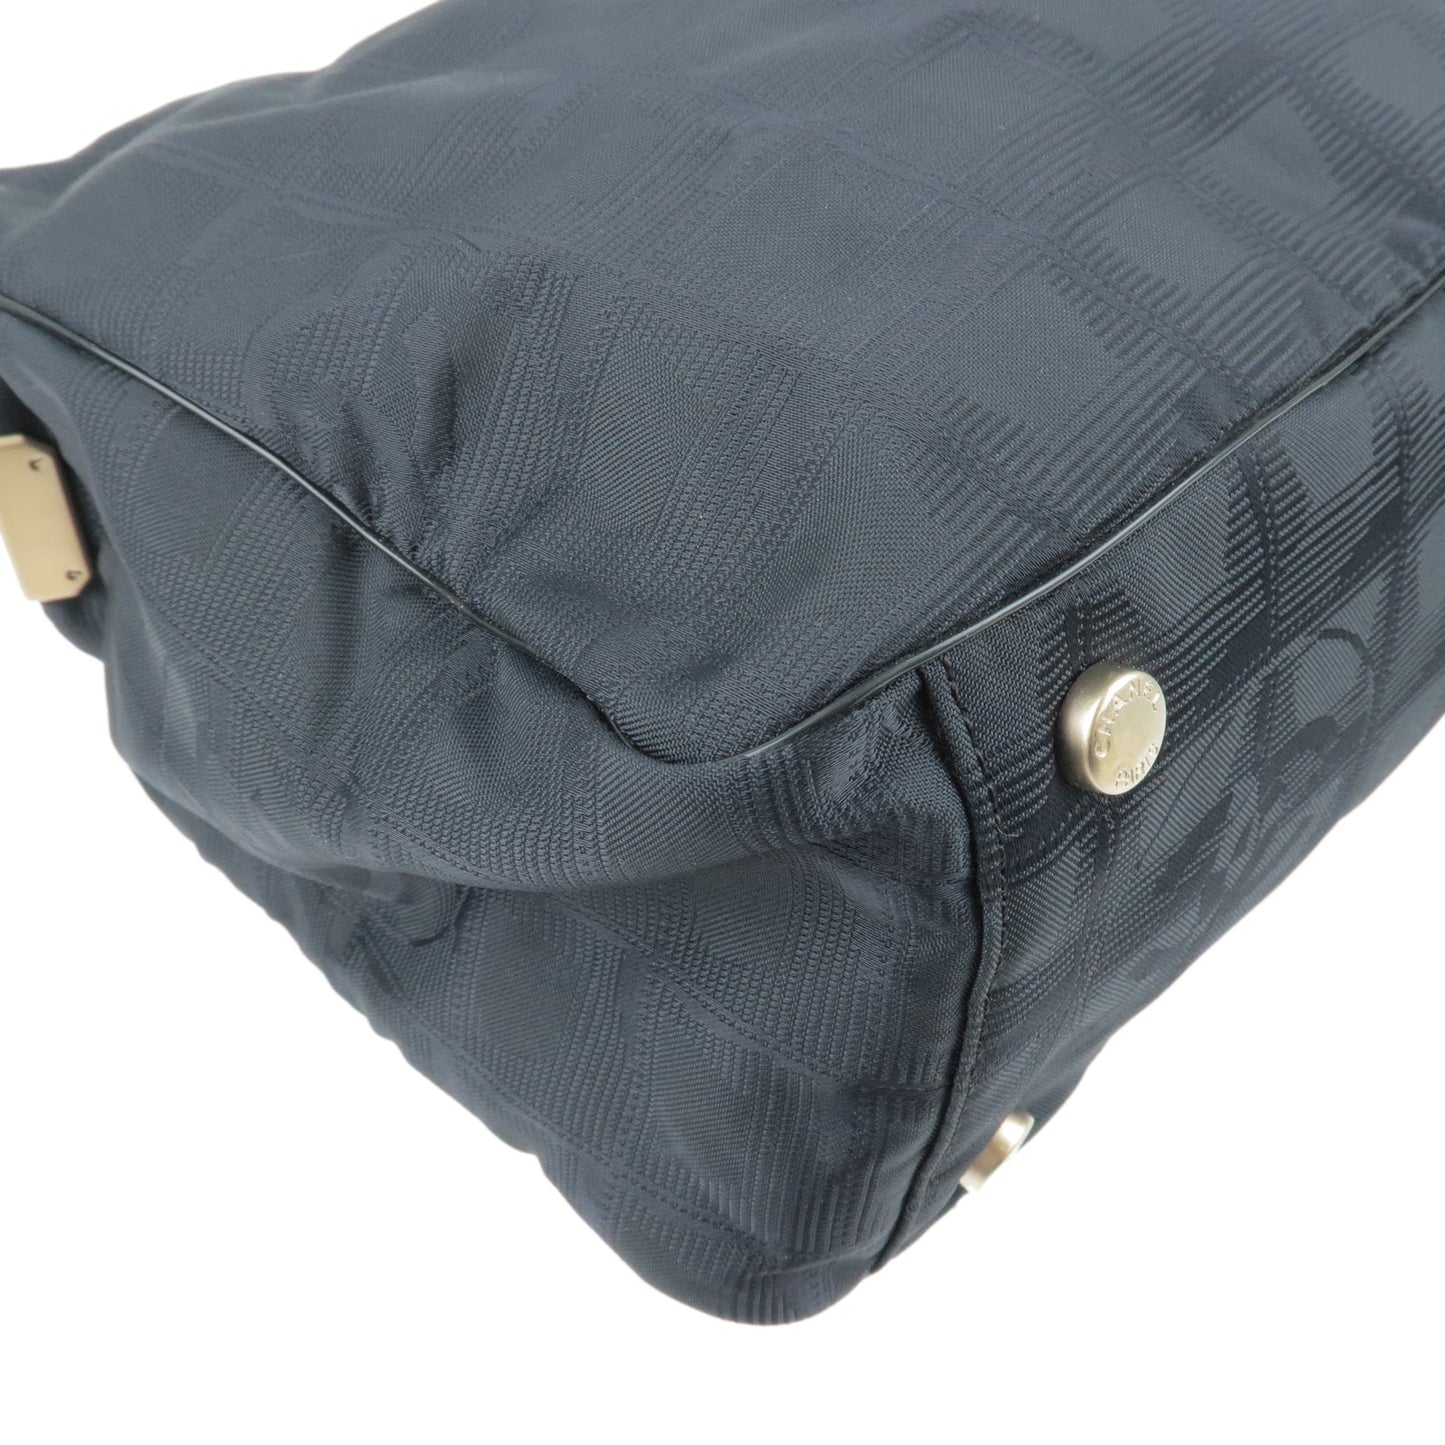 CHANEL Travel Line Nylon Jacquard Leather Hand Bag Black A23807